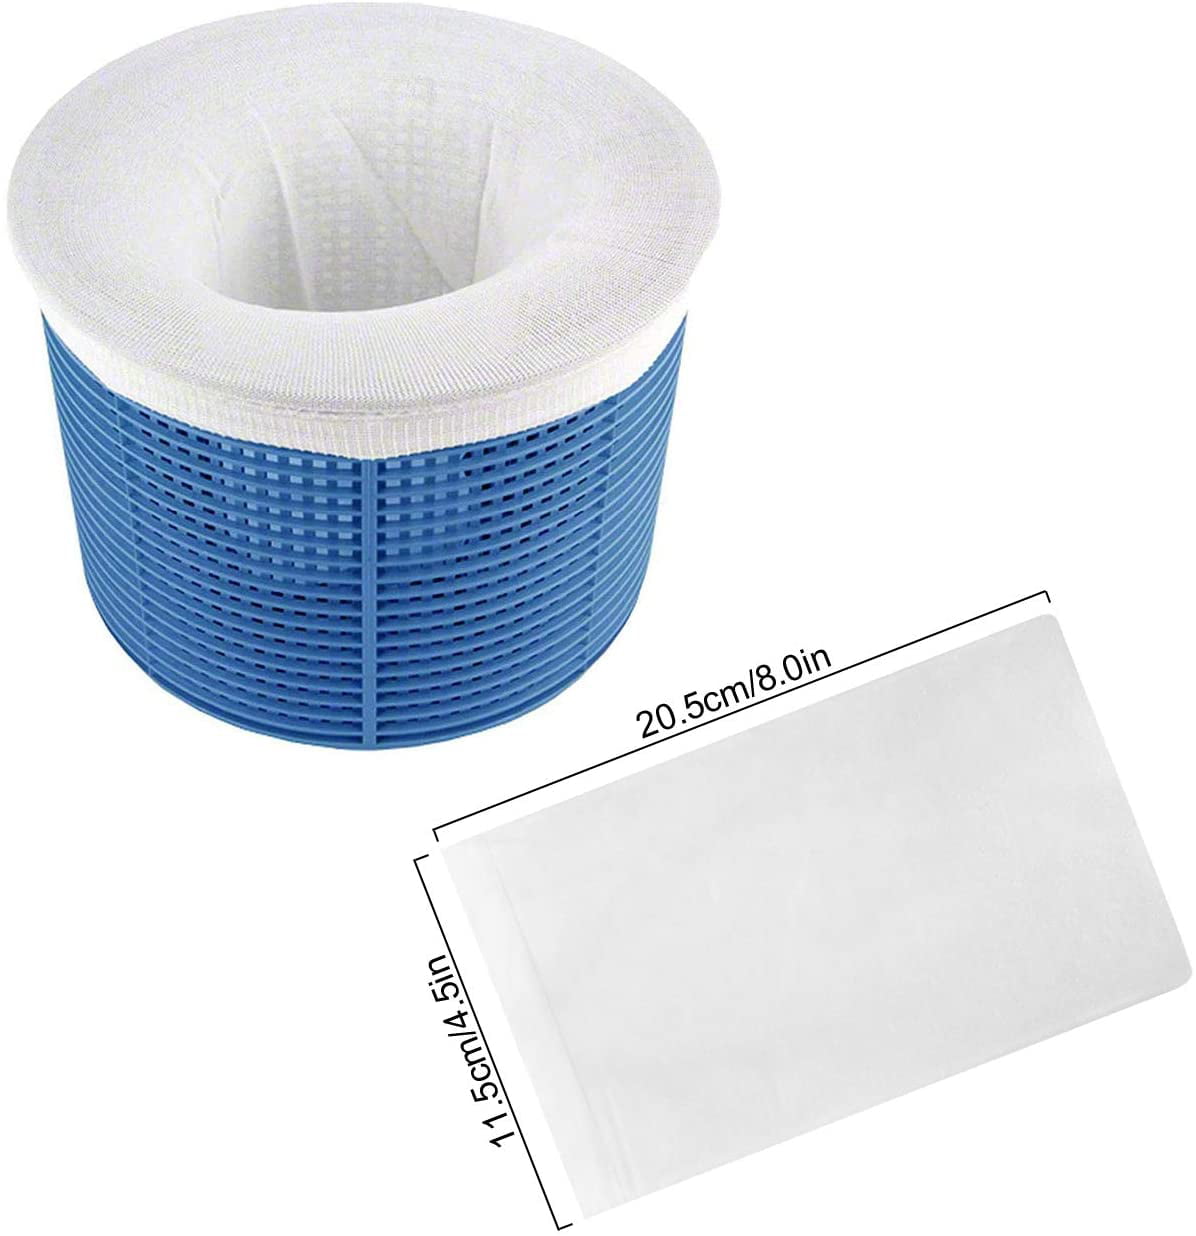 Filters Baskets Coopache 30-Pack Of Pool Skimmer Socks Skimmers Cleans Debris 